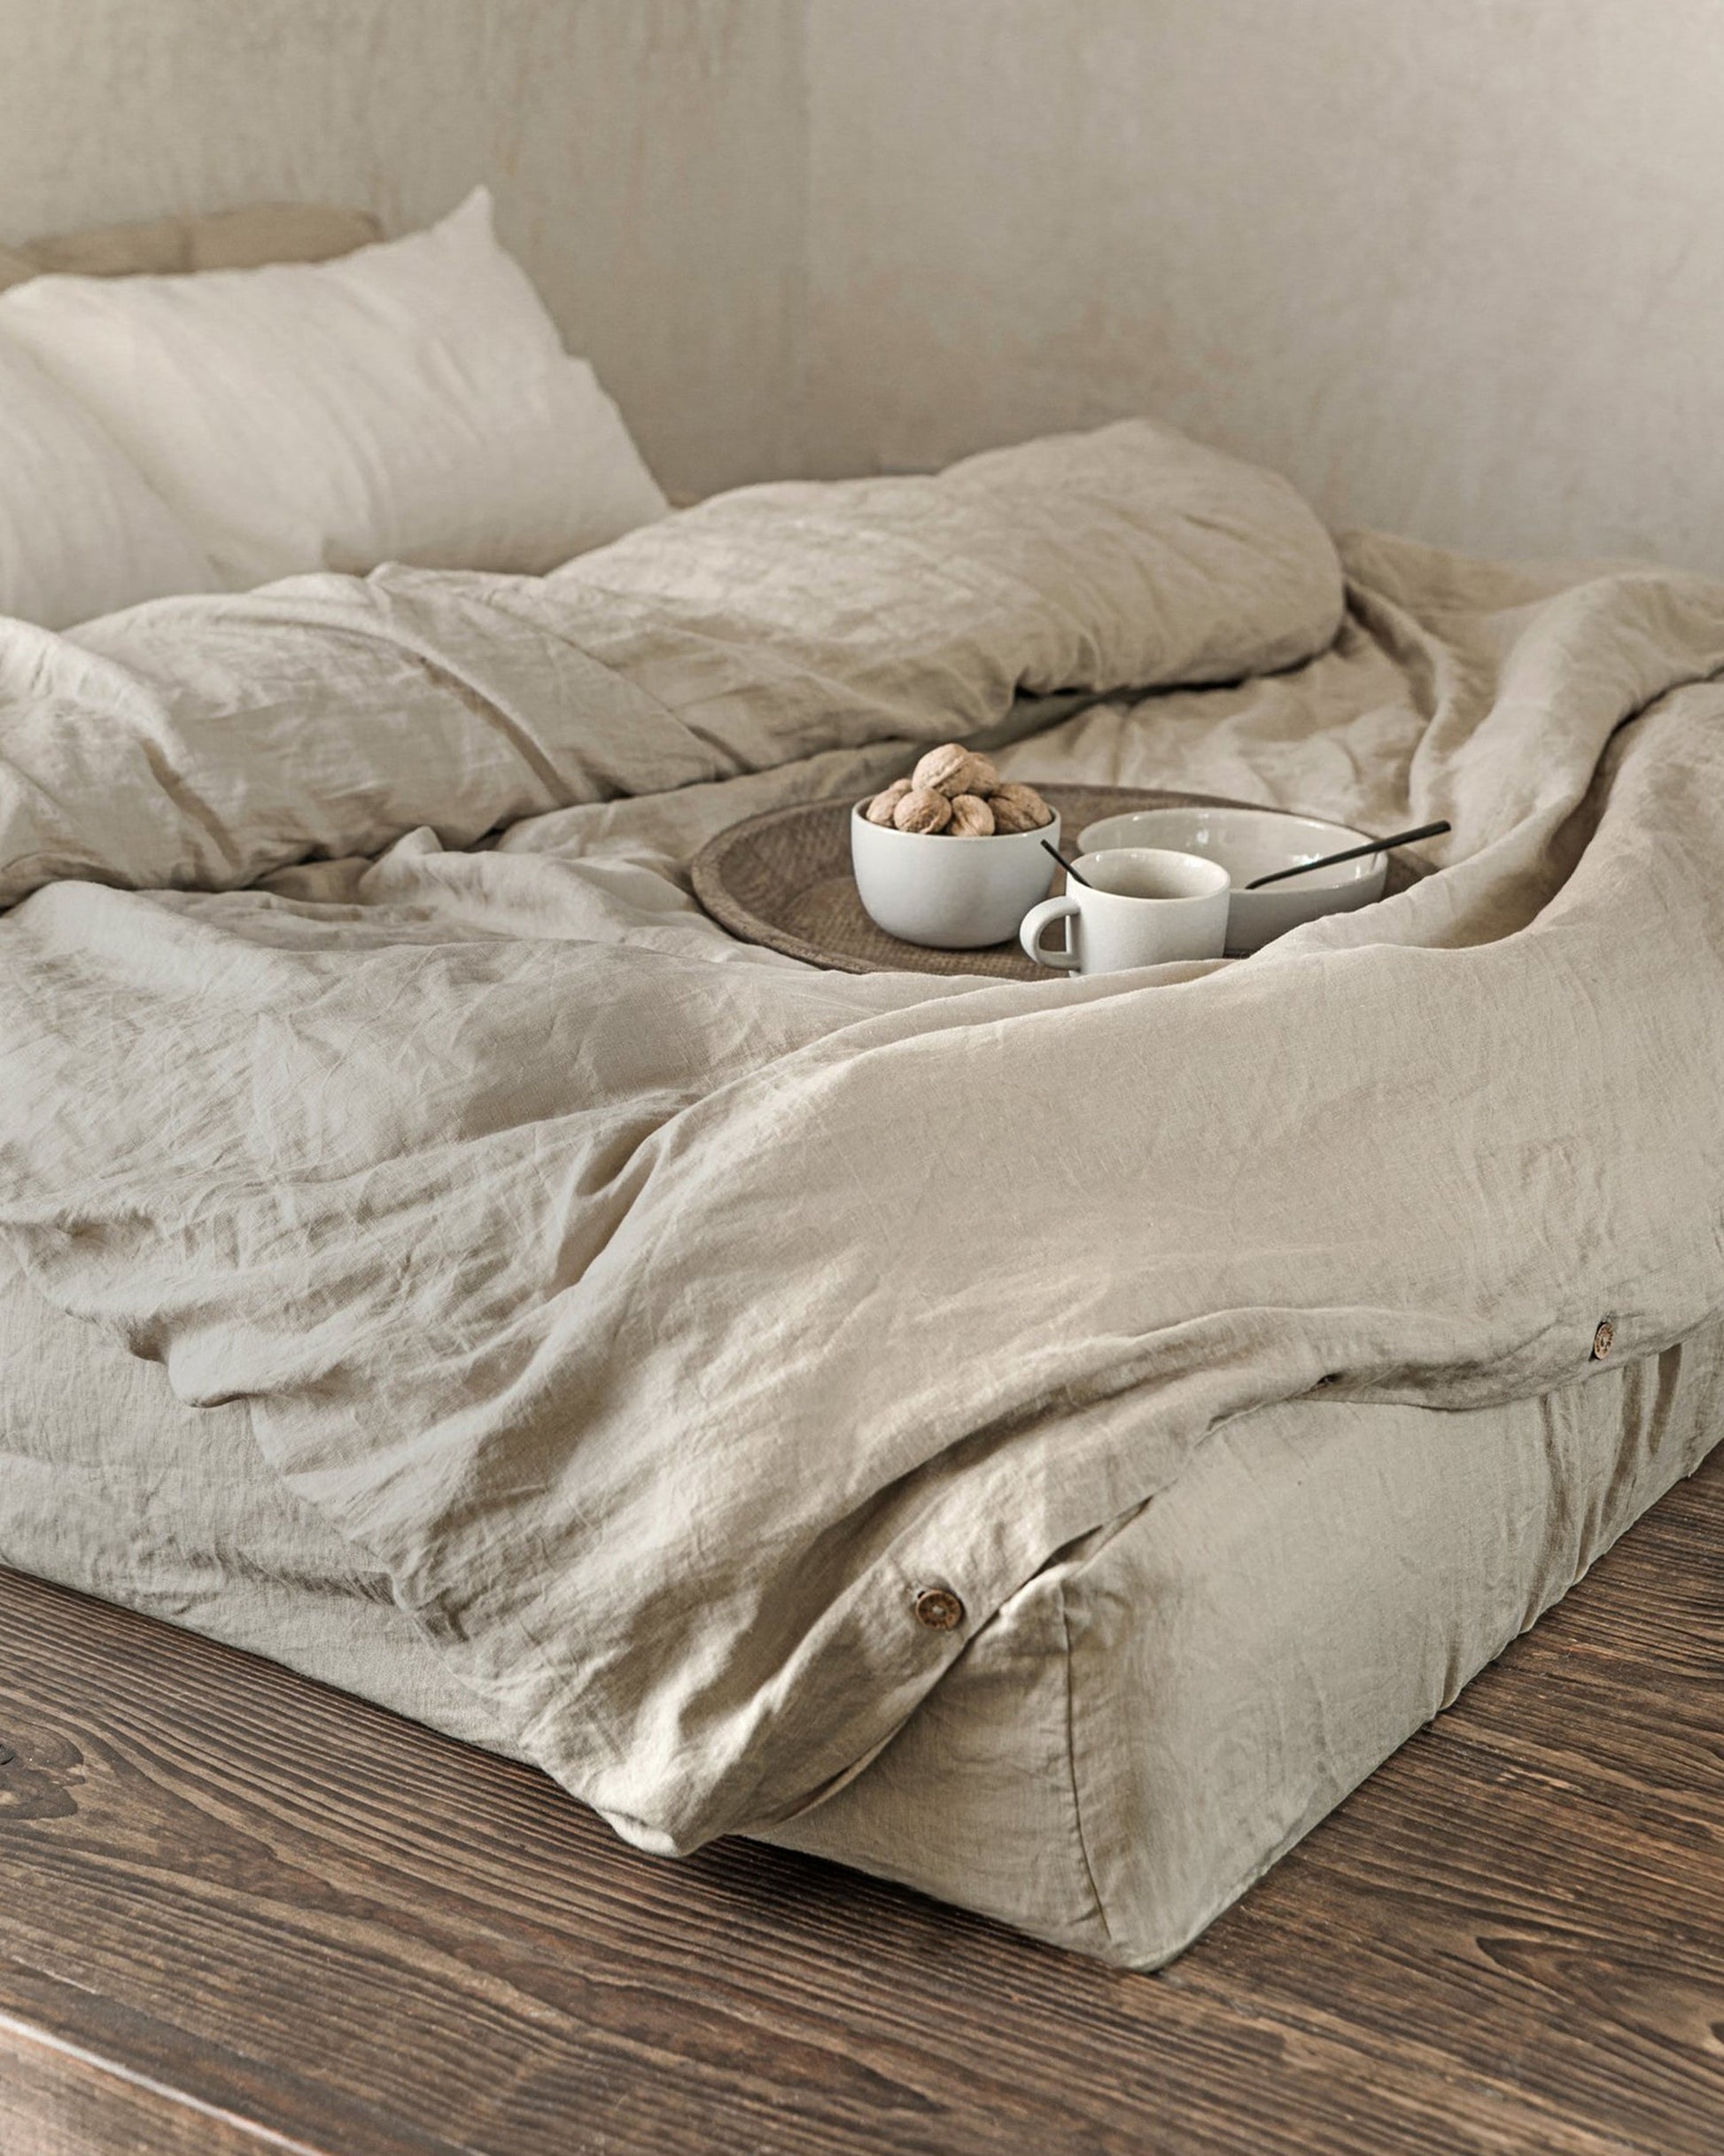 Linen Bedding Set in Natural Linen oatmeal Color duvet Cover 2 Pillowcases.  US King, Queen. 